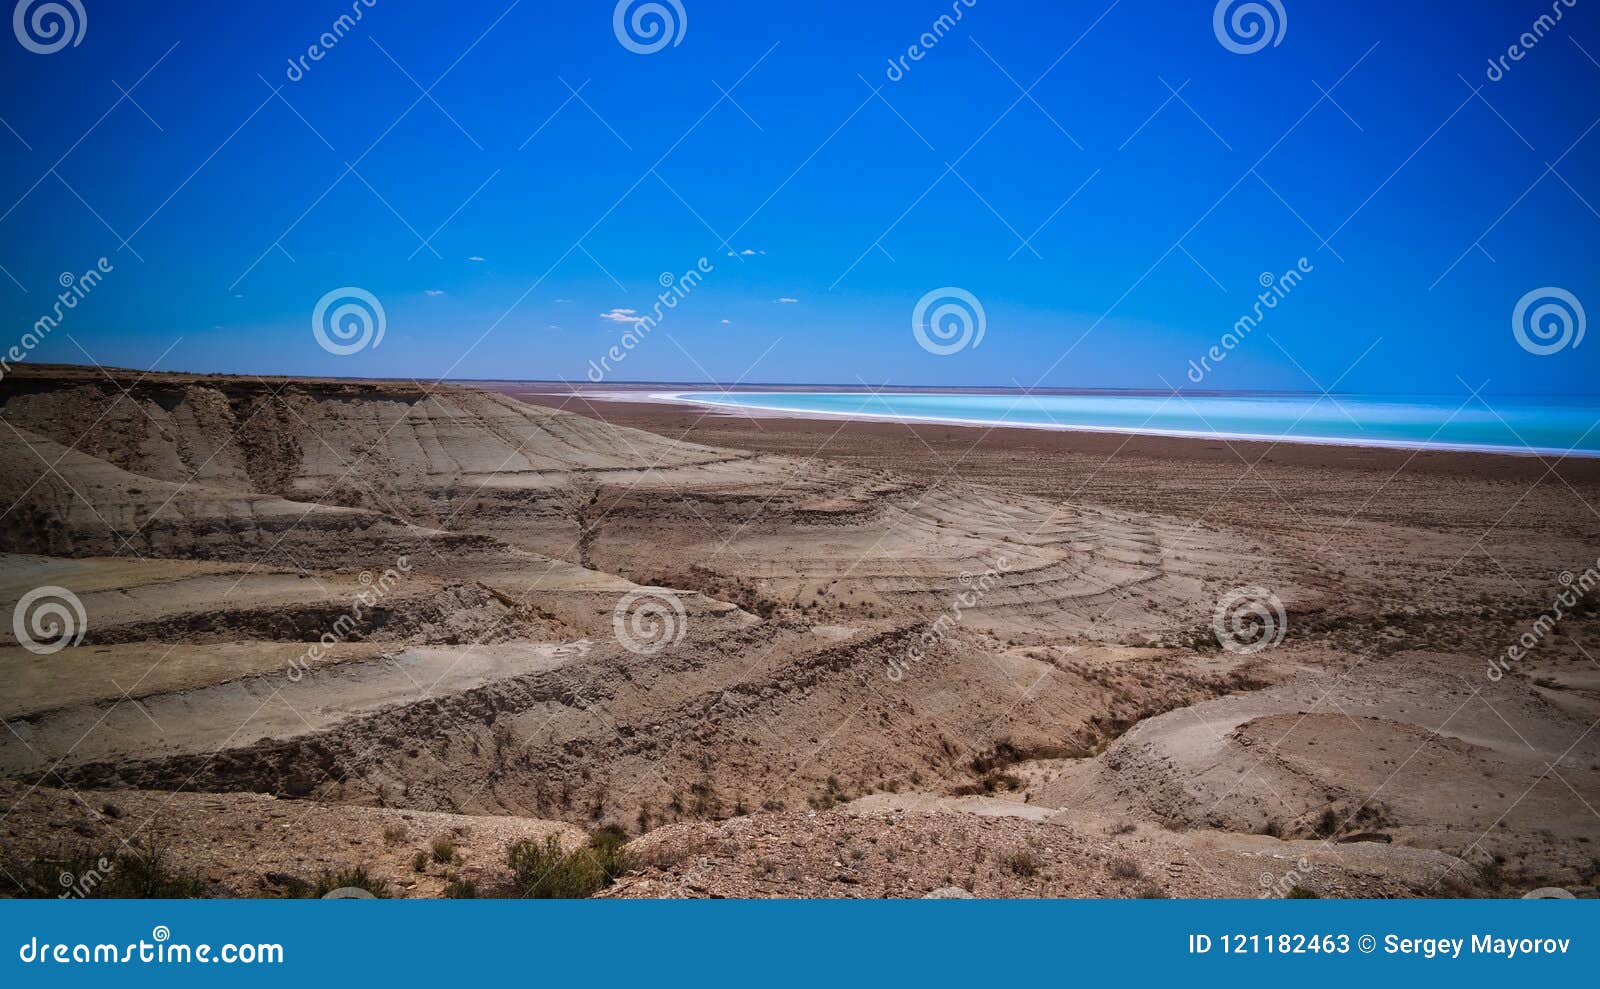 panorama view to saline barsa kelmes lake and ustyurt plateau in karakalpakstan, uzbekistan